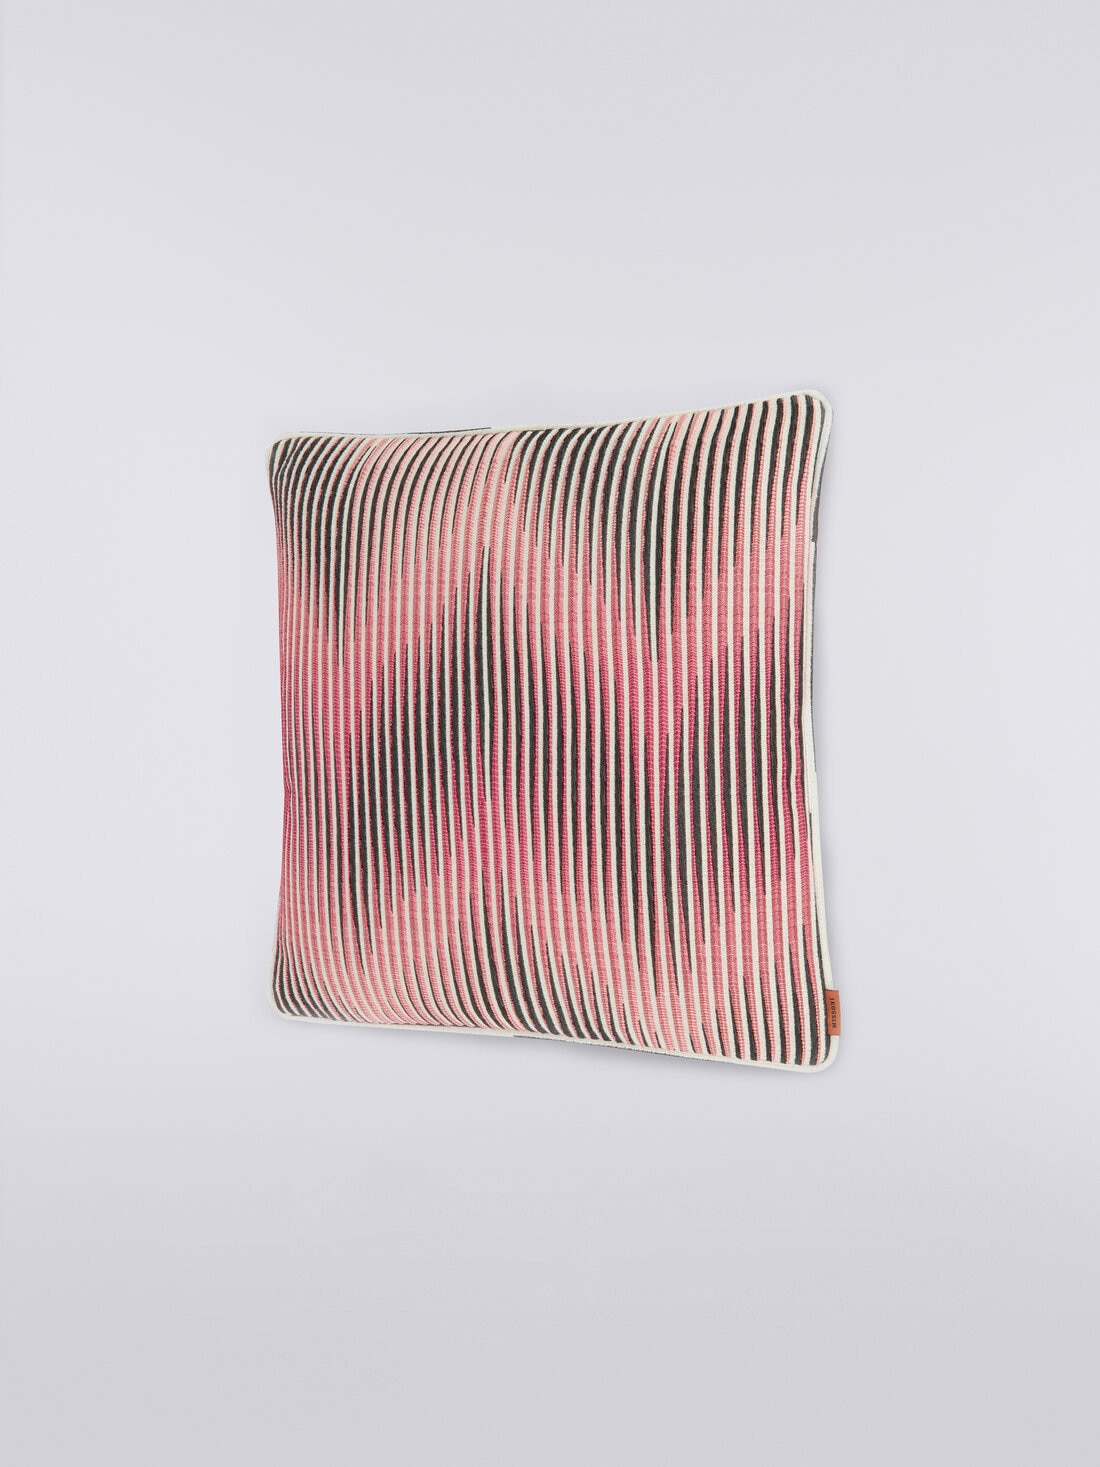 Ande 40x40 cm cushion with faded chevron, Multicoloured  - 8051575829574 - 1